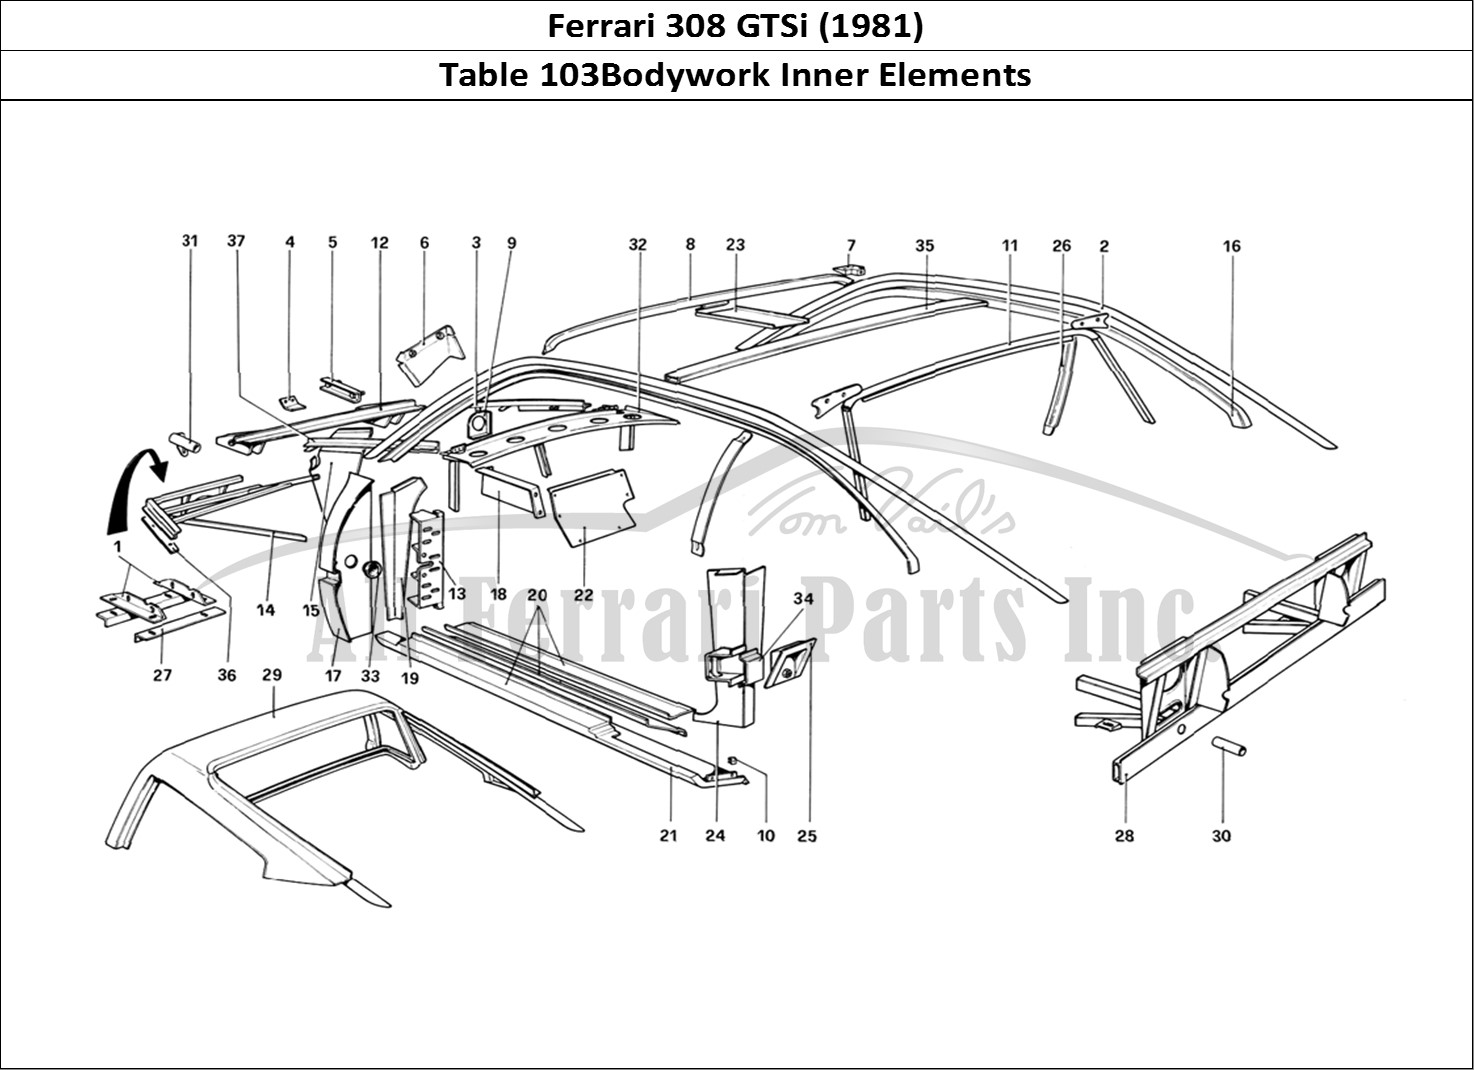 Ferrari Parts Ferrari 308 GTBi (1981) Page 103 Body Shell - Inner Elemen